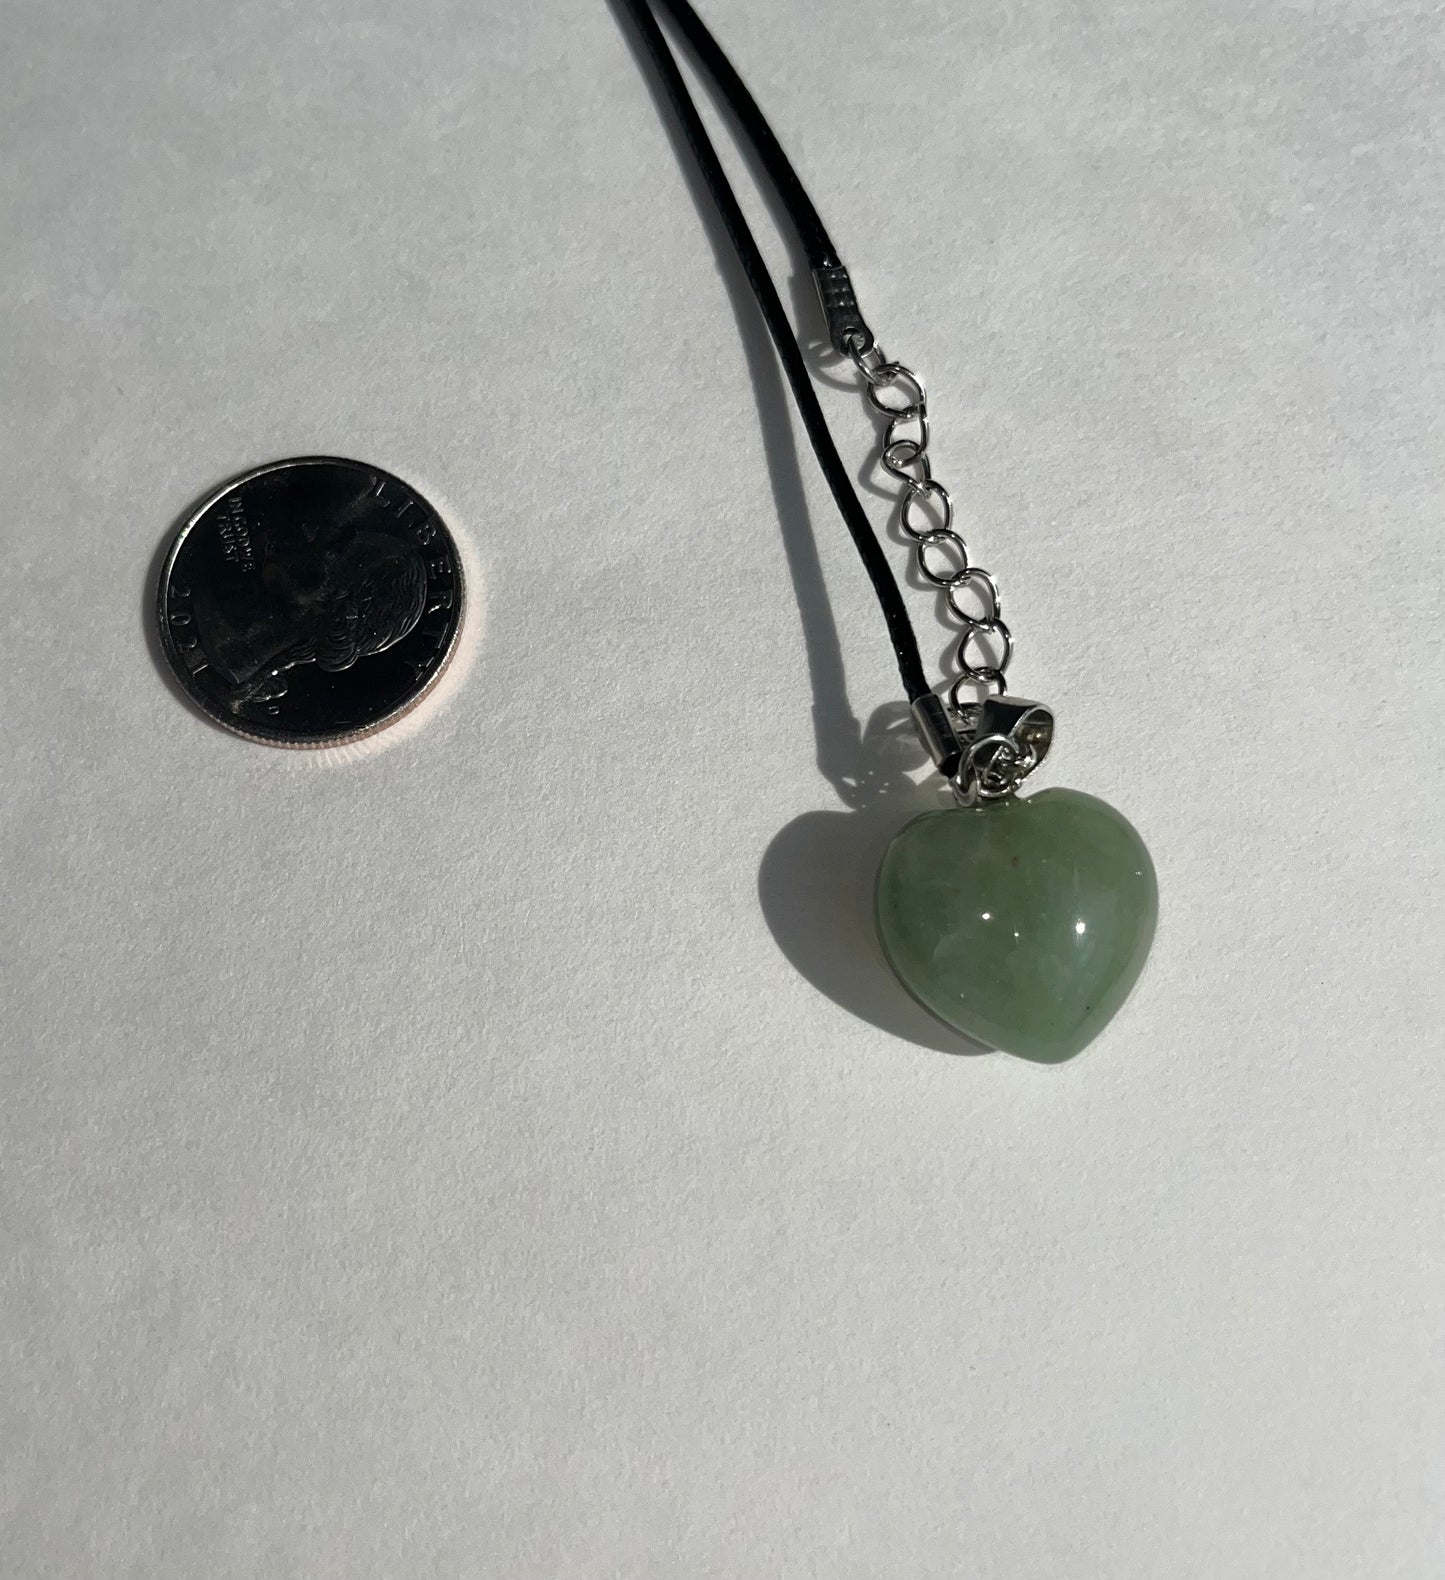 Green Aventurine Heart Pendant Necklace